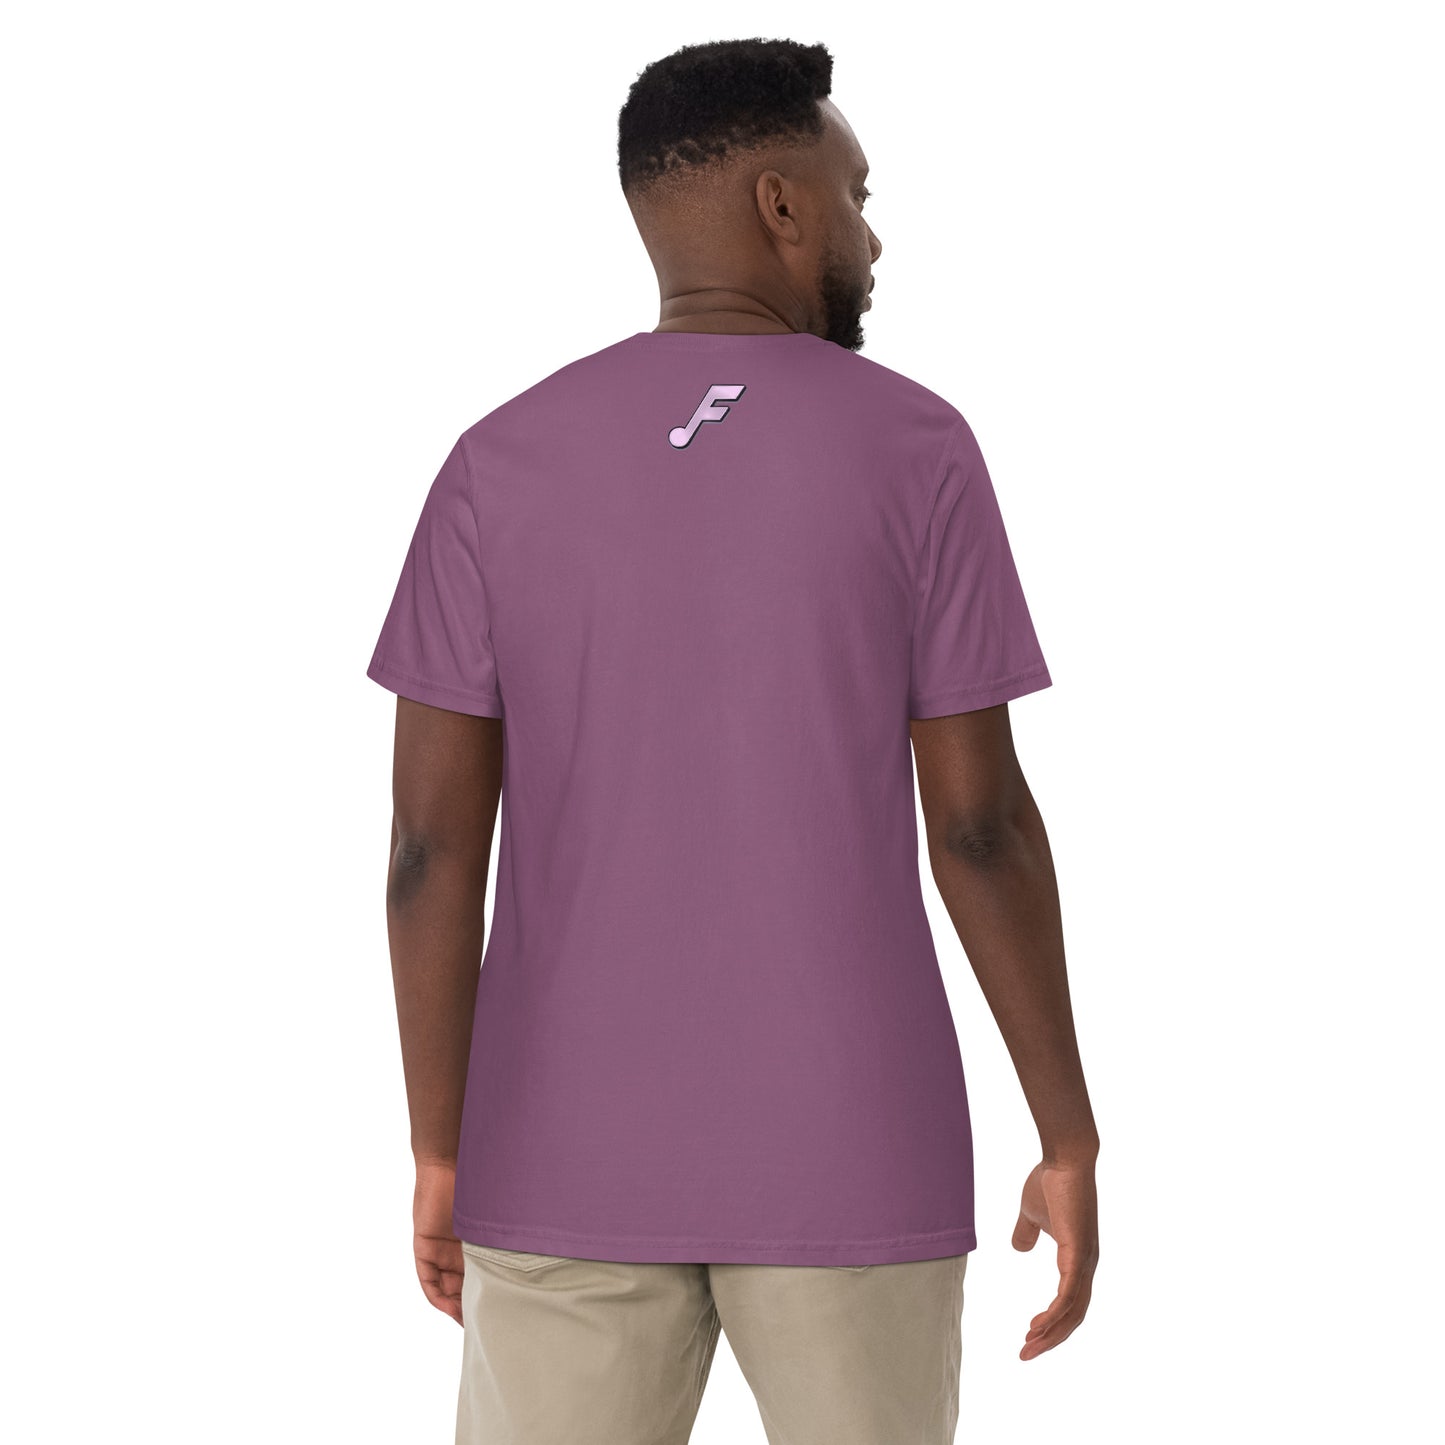 Fretty Arthur's Fist Unisex garment-dyed heavyweight t-shirt